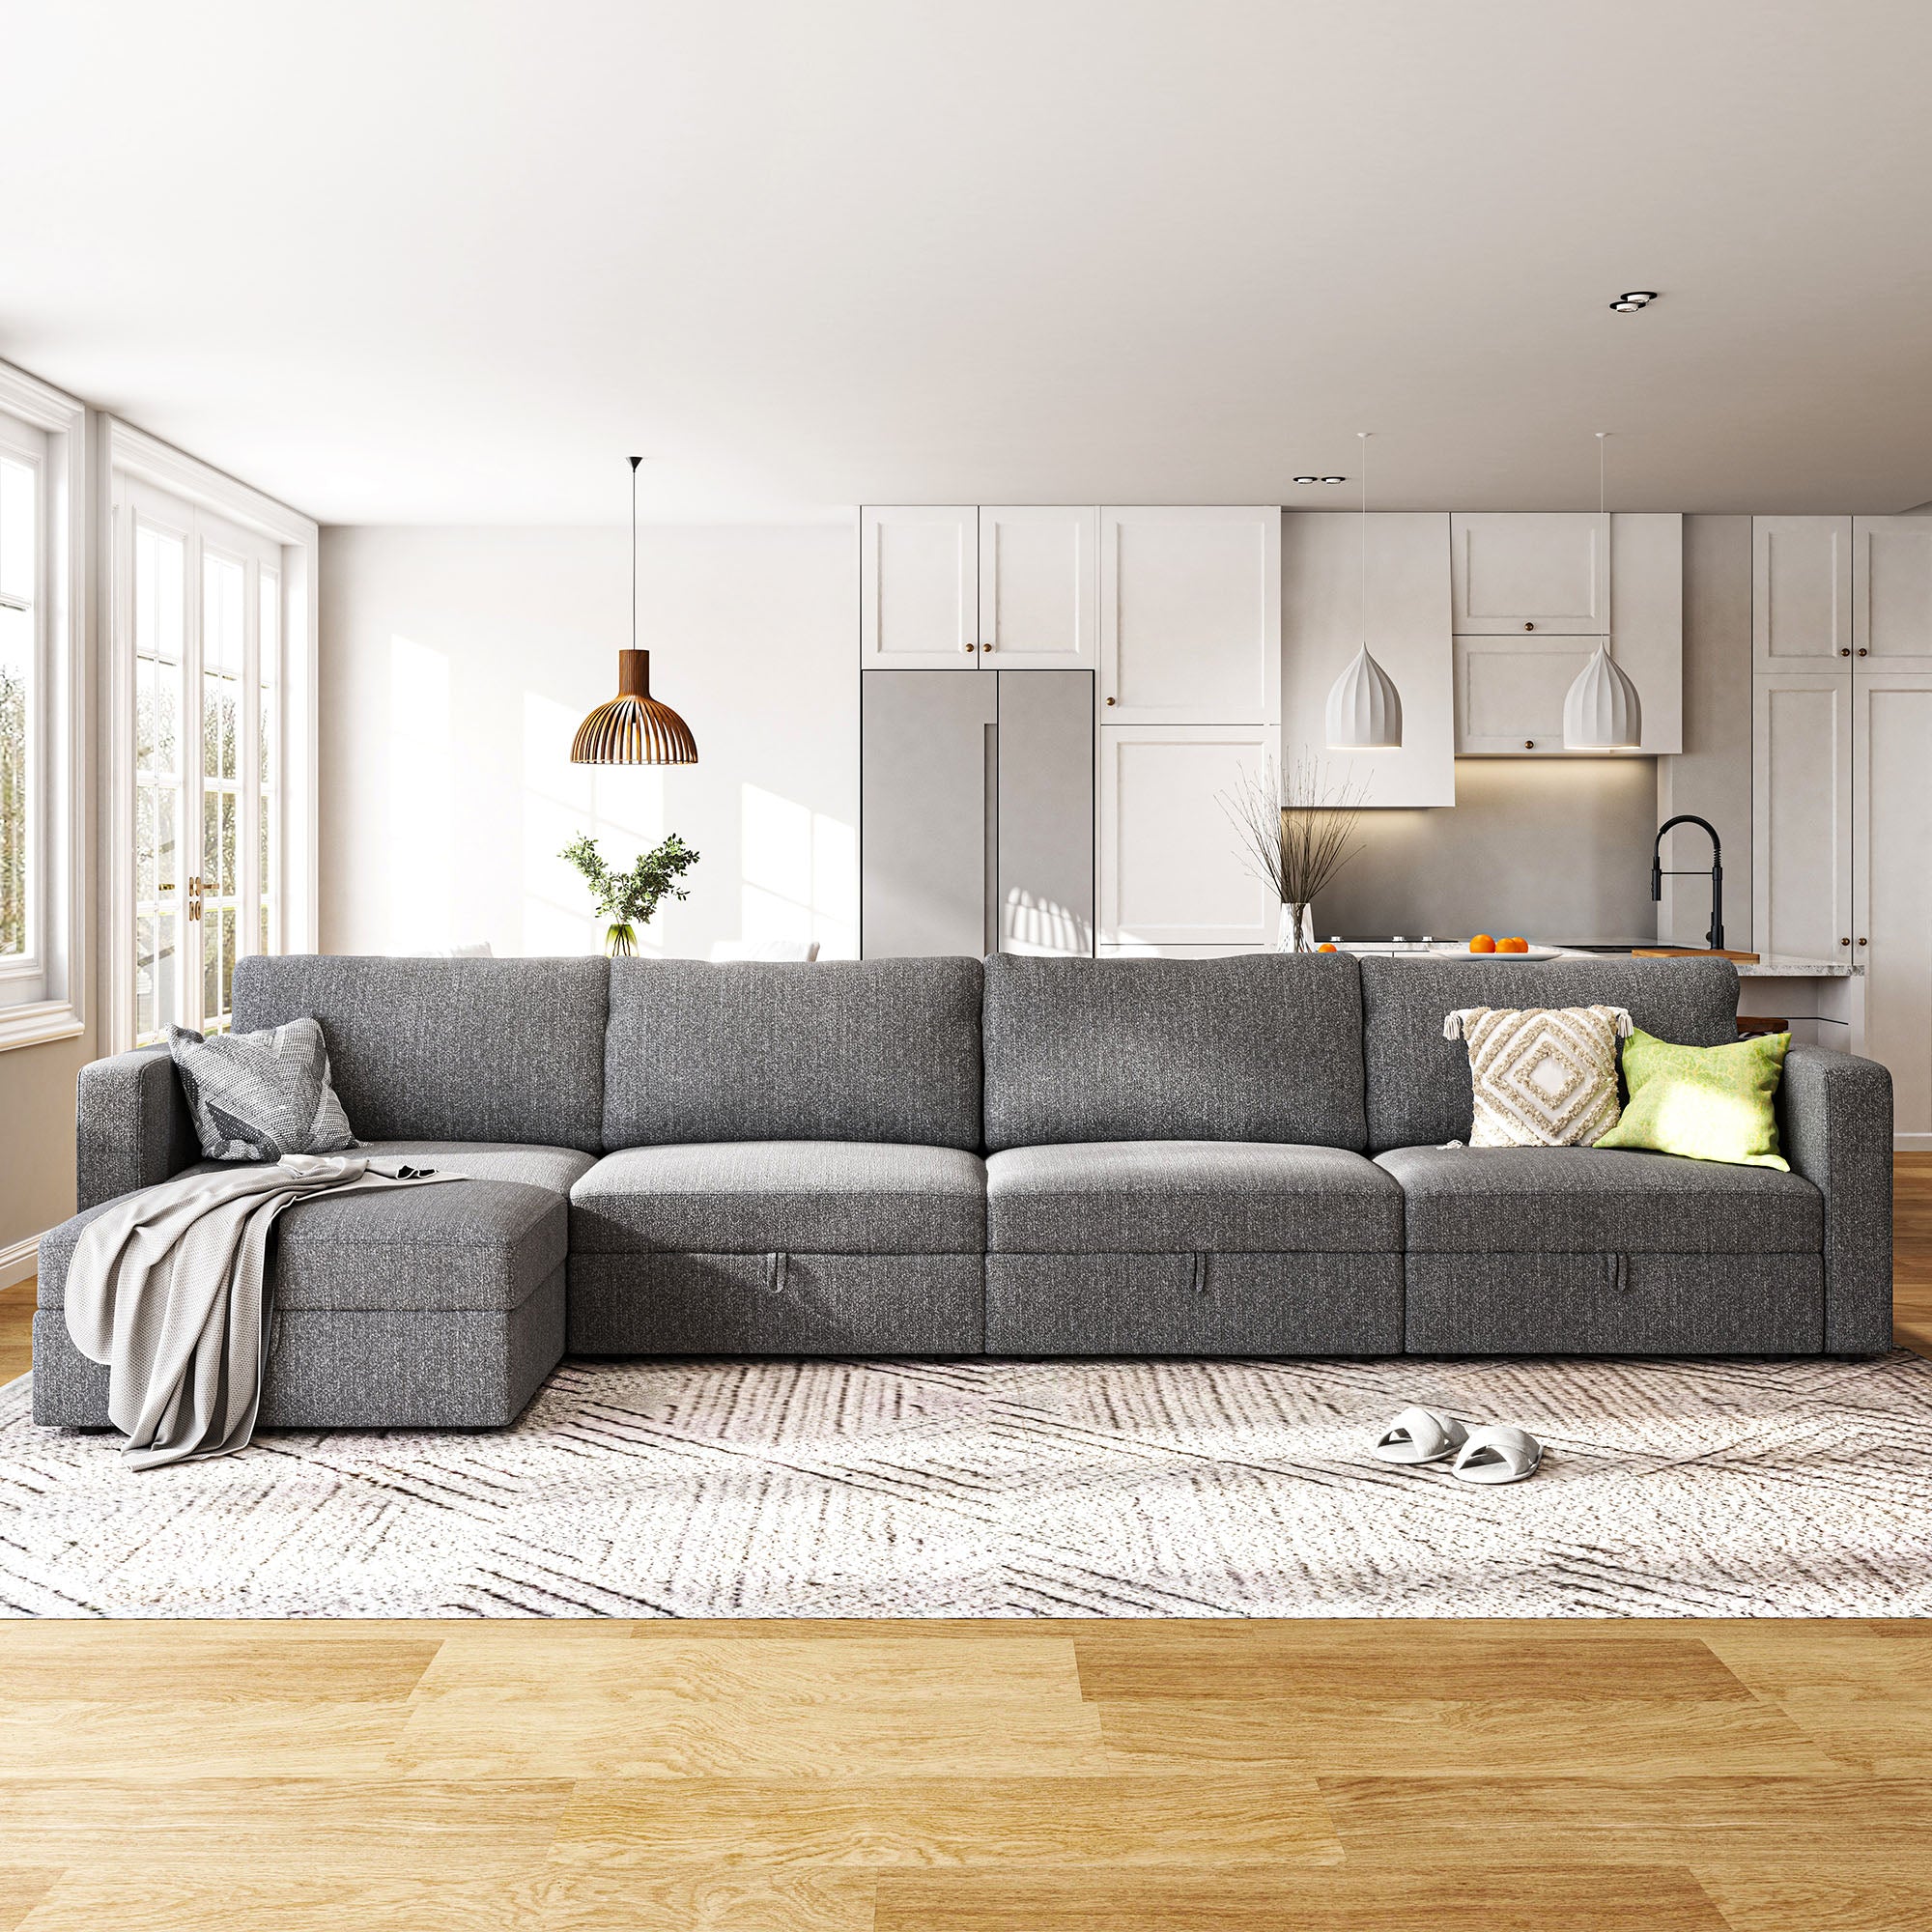 HONBAY Linen Grey Polyester L-shaped Spacious Modular Sofa for Living Room